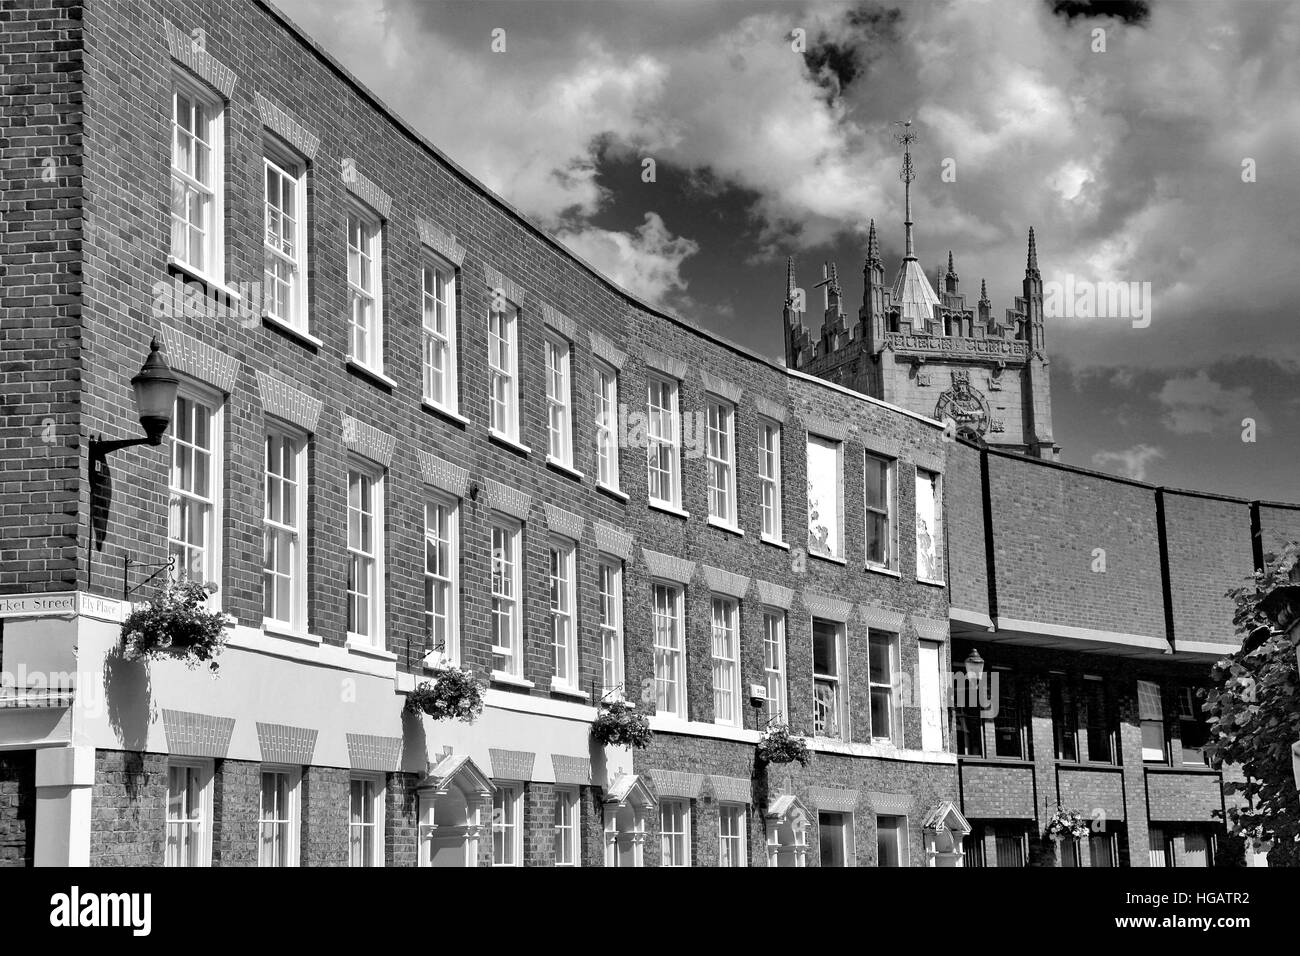 The Cresent Buildings, Wisbech town, Cambridgeshire, England, UK Stock Photo